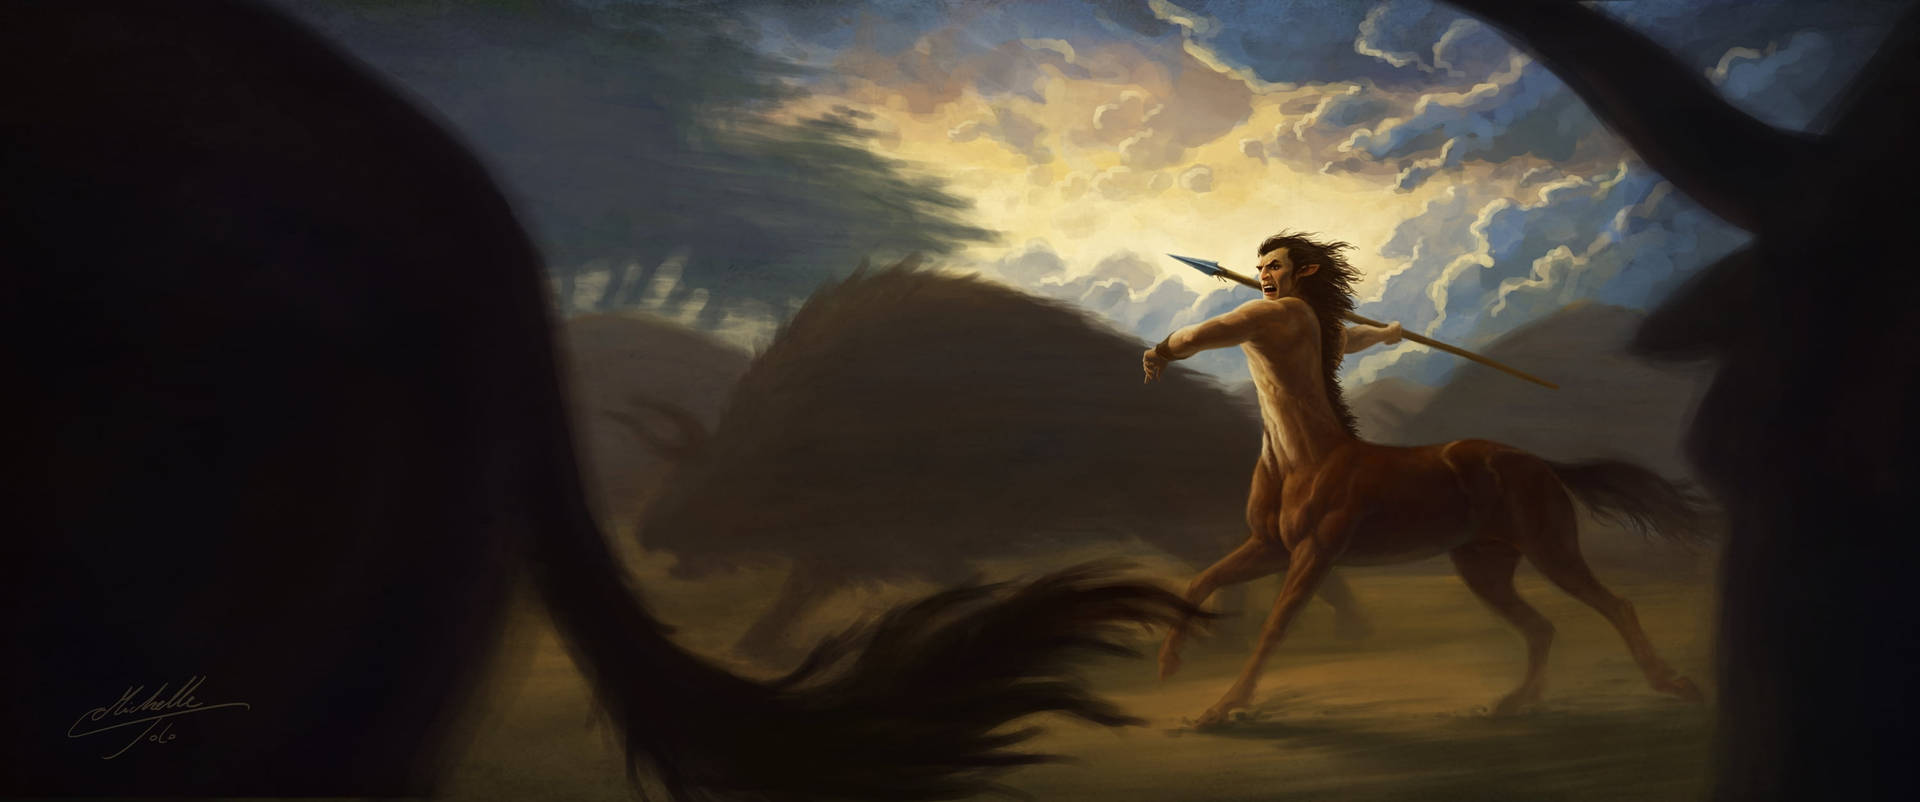 Half Man Half Horse Mythical Creature Background